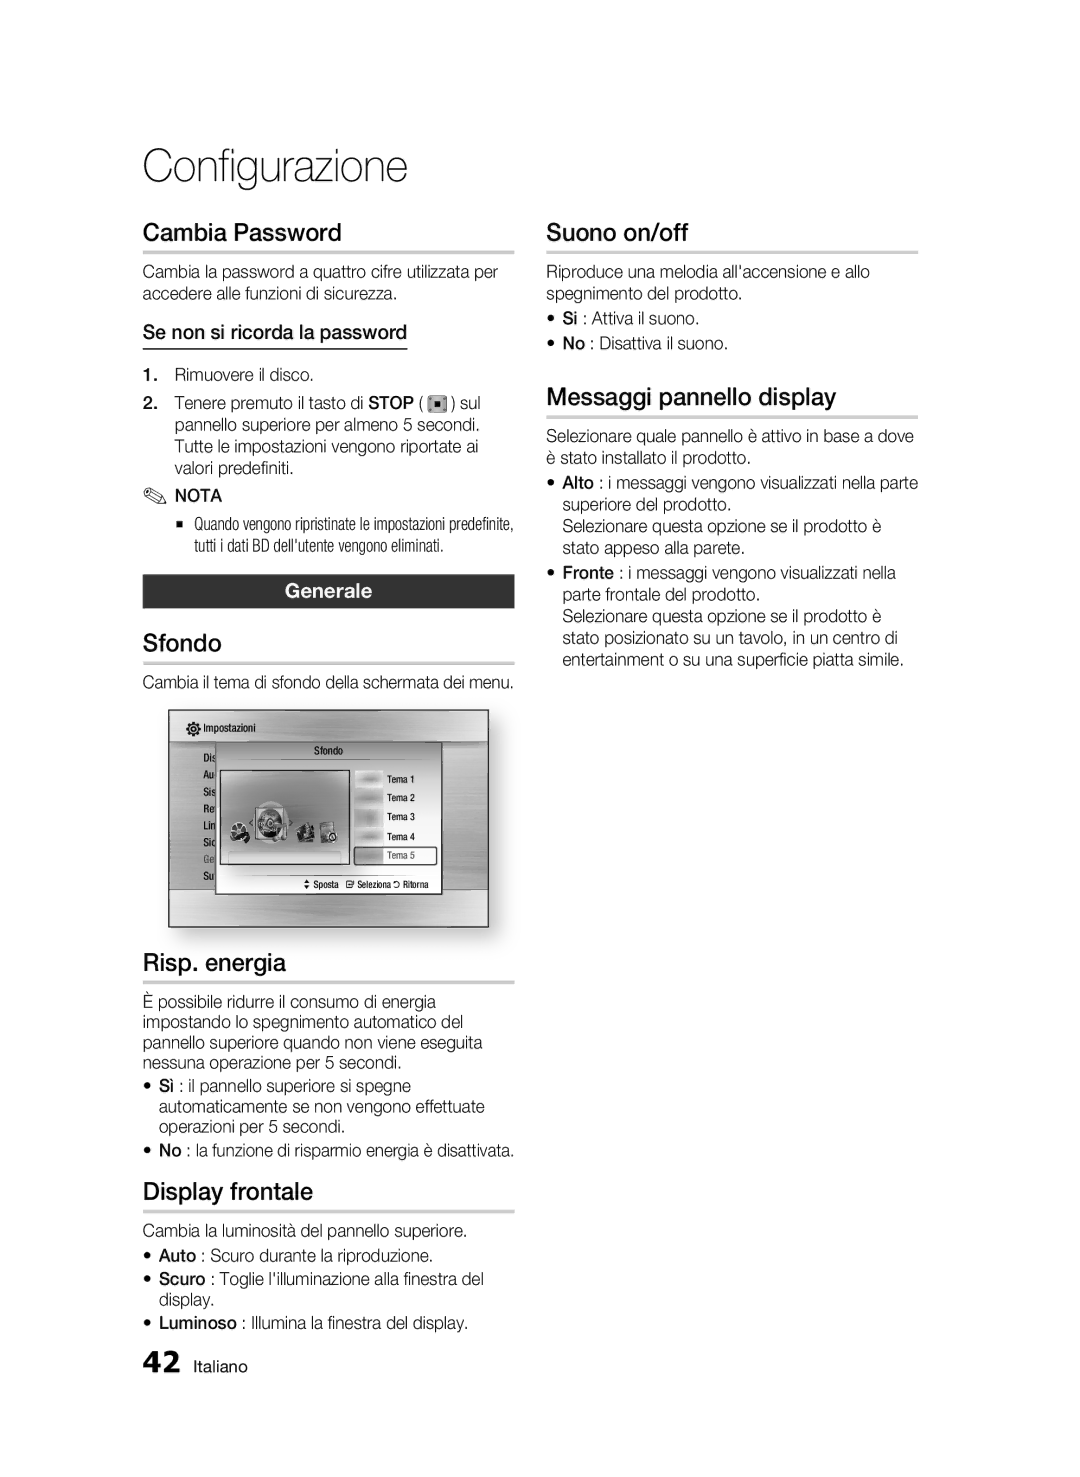 Samsung BD-C7500/XEF Cambia Password, Sfondo, Risp. energia, Display frontale, Suono on/off, Messaggi pannello display 